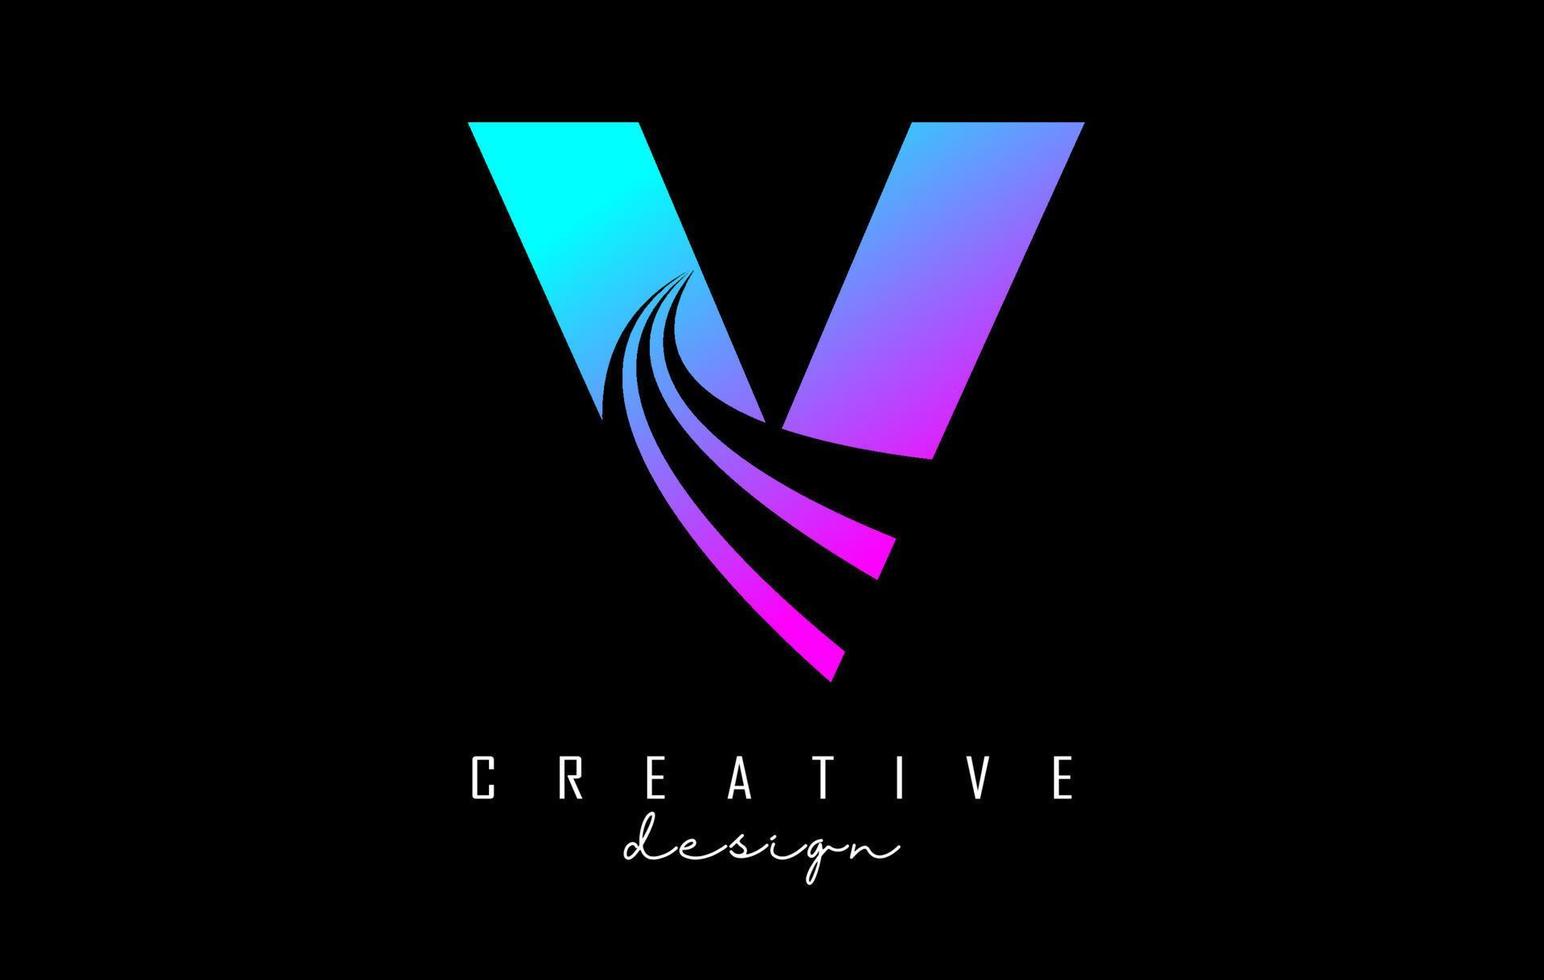 kleurrijk letter v-logo met leidende lijnen en wegconceptontwerp. letter v met geometrisch ontwerp. vector